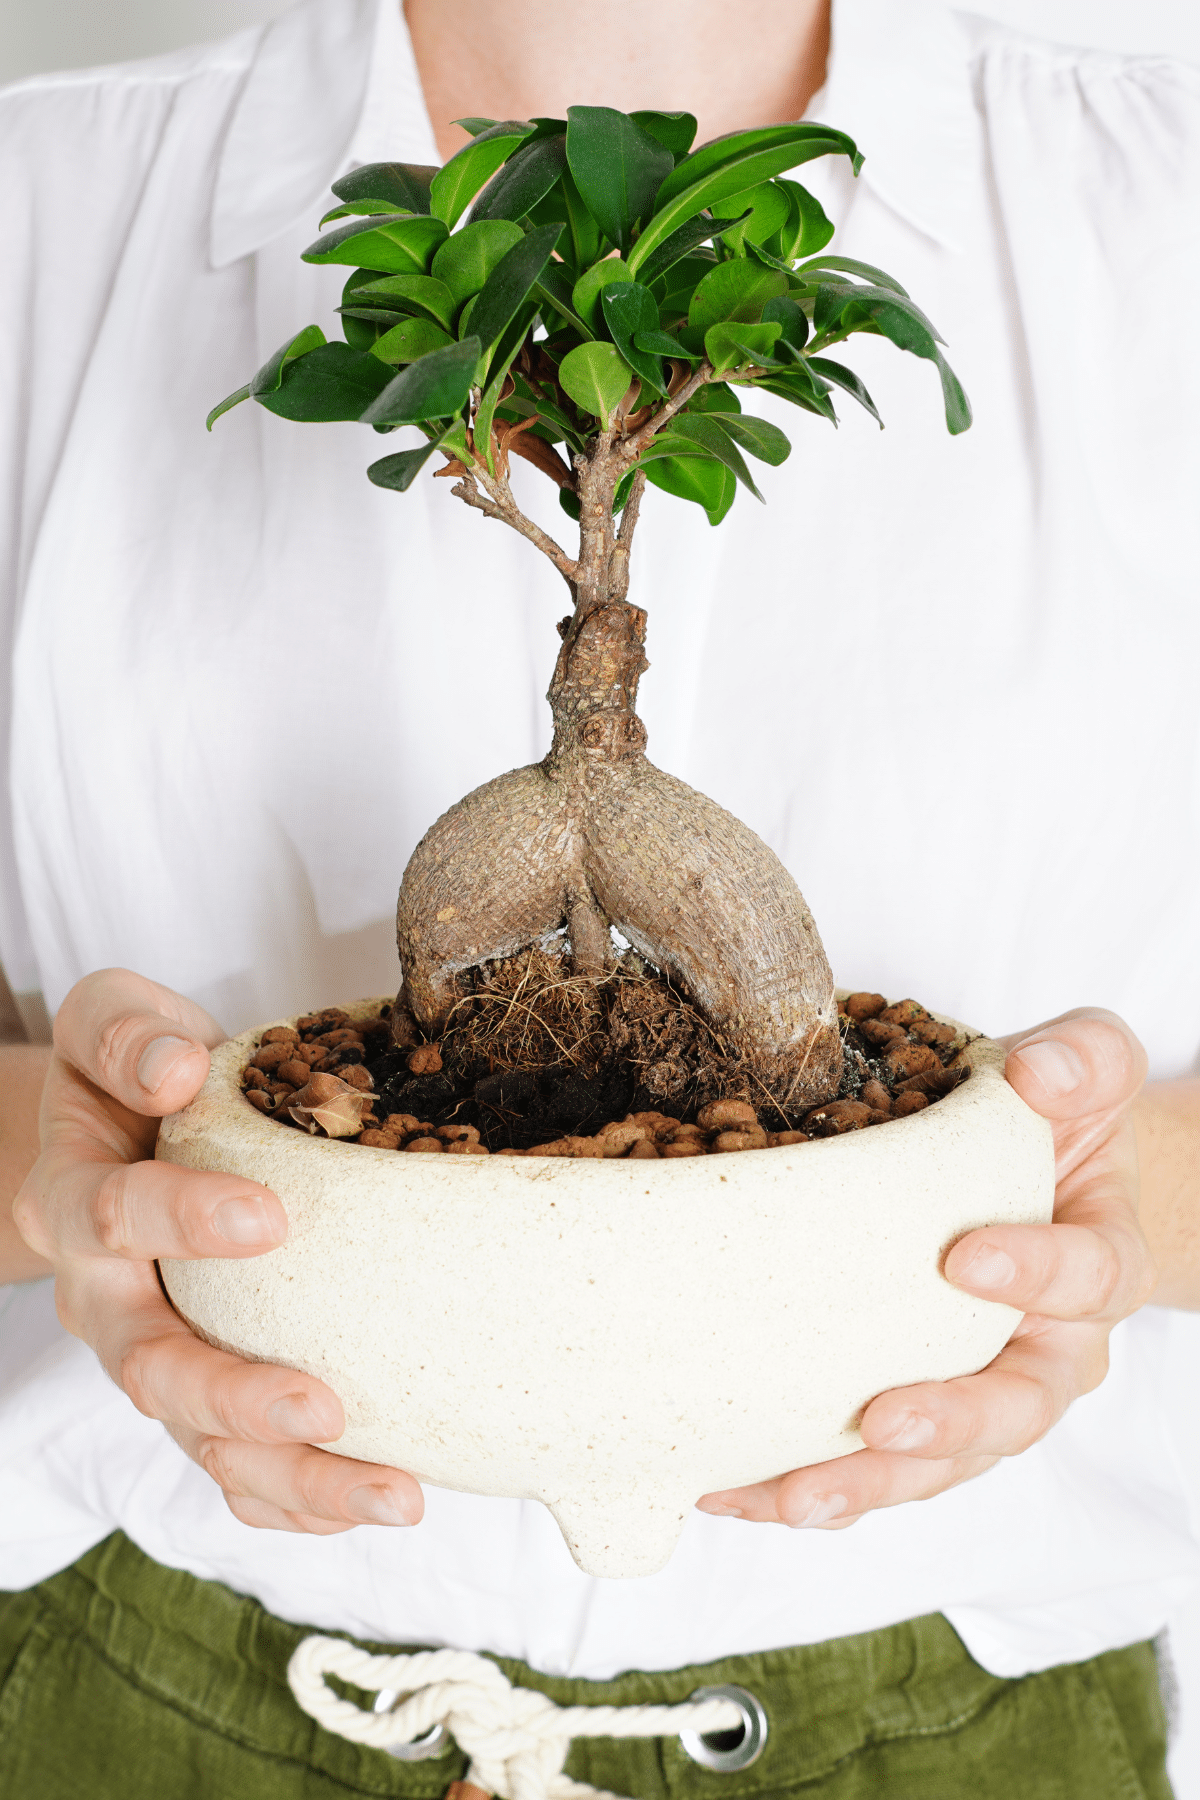 A woman holding a Ficus bonsai plant in a white bowl.